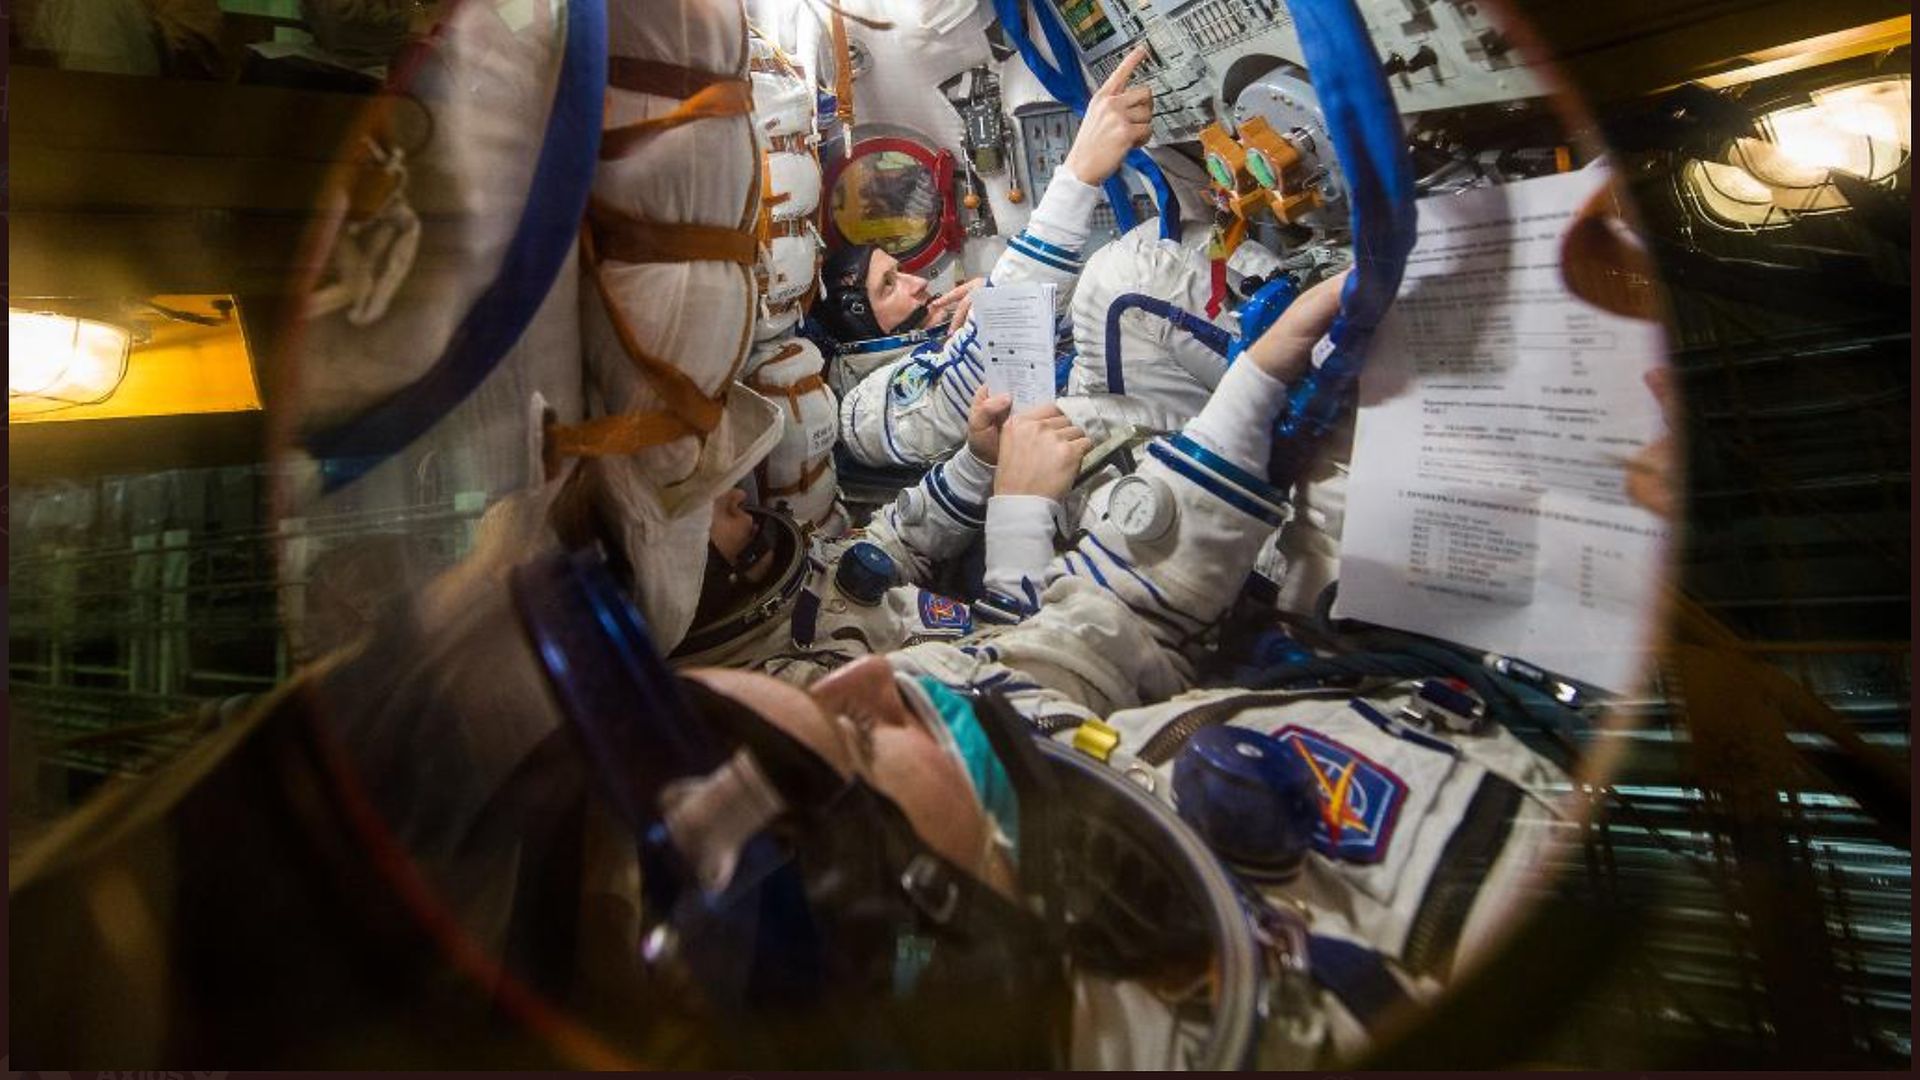 NASA astronaut Kate Rubins and Russian cosmonauts Sergey Ryzhikov and Sergey Kud-Sverchkov aboard the spacecraft